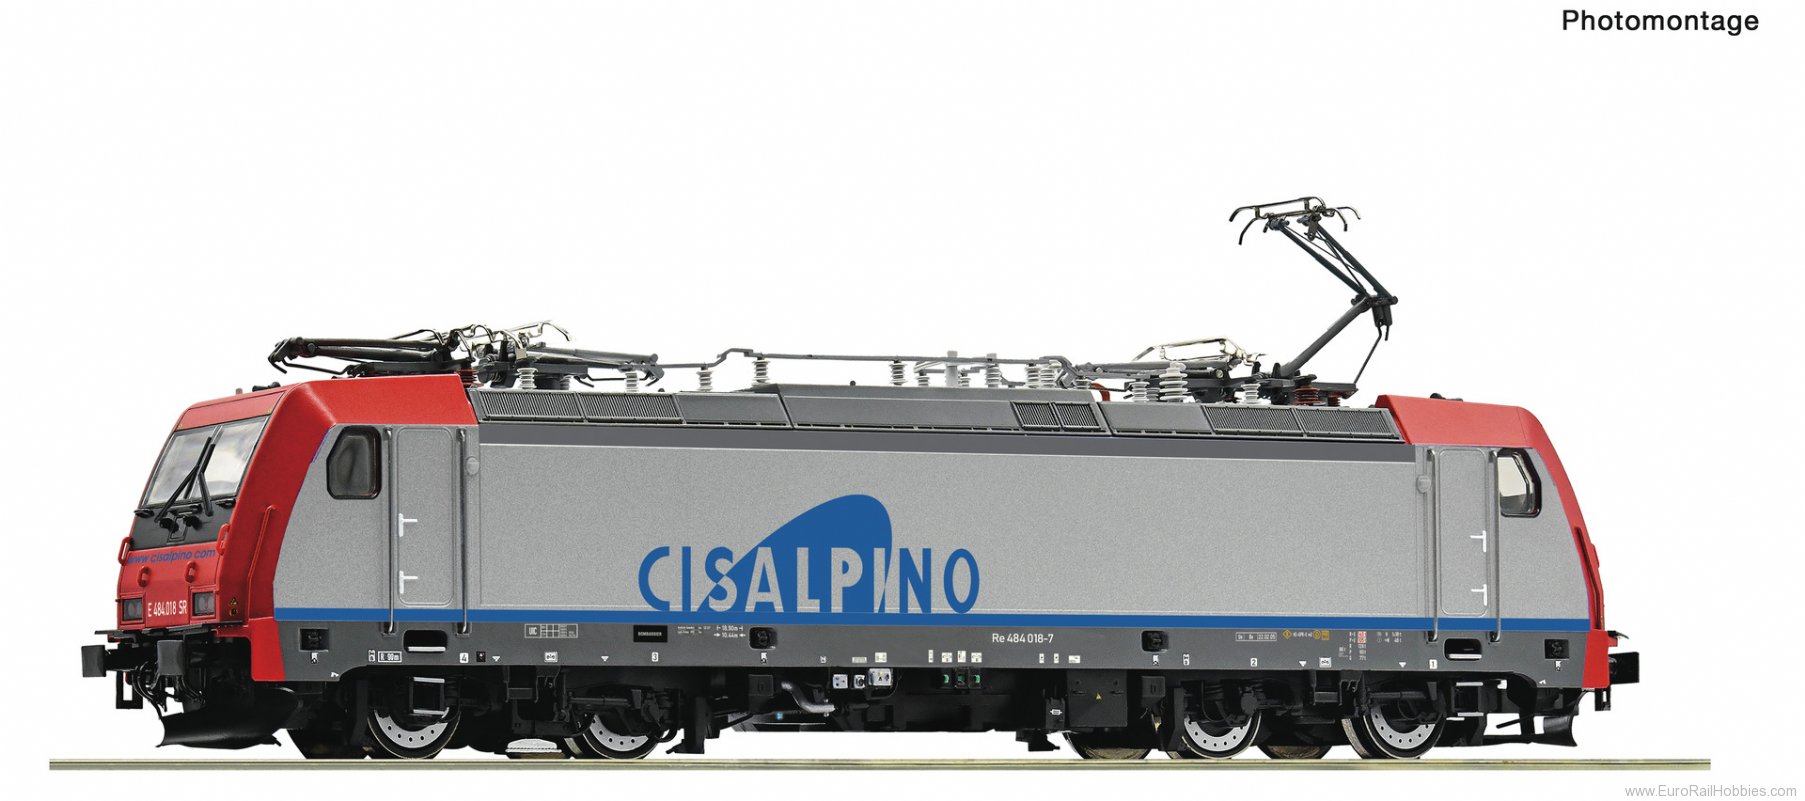 Roco 7500031 Electric locomotive Re 484 018-7, Cisalpino (